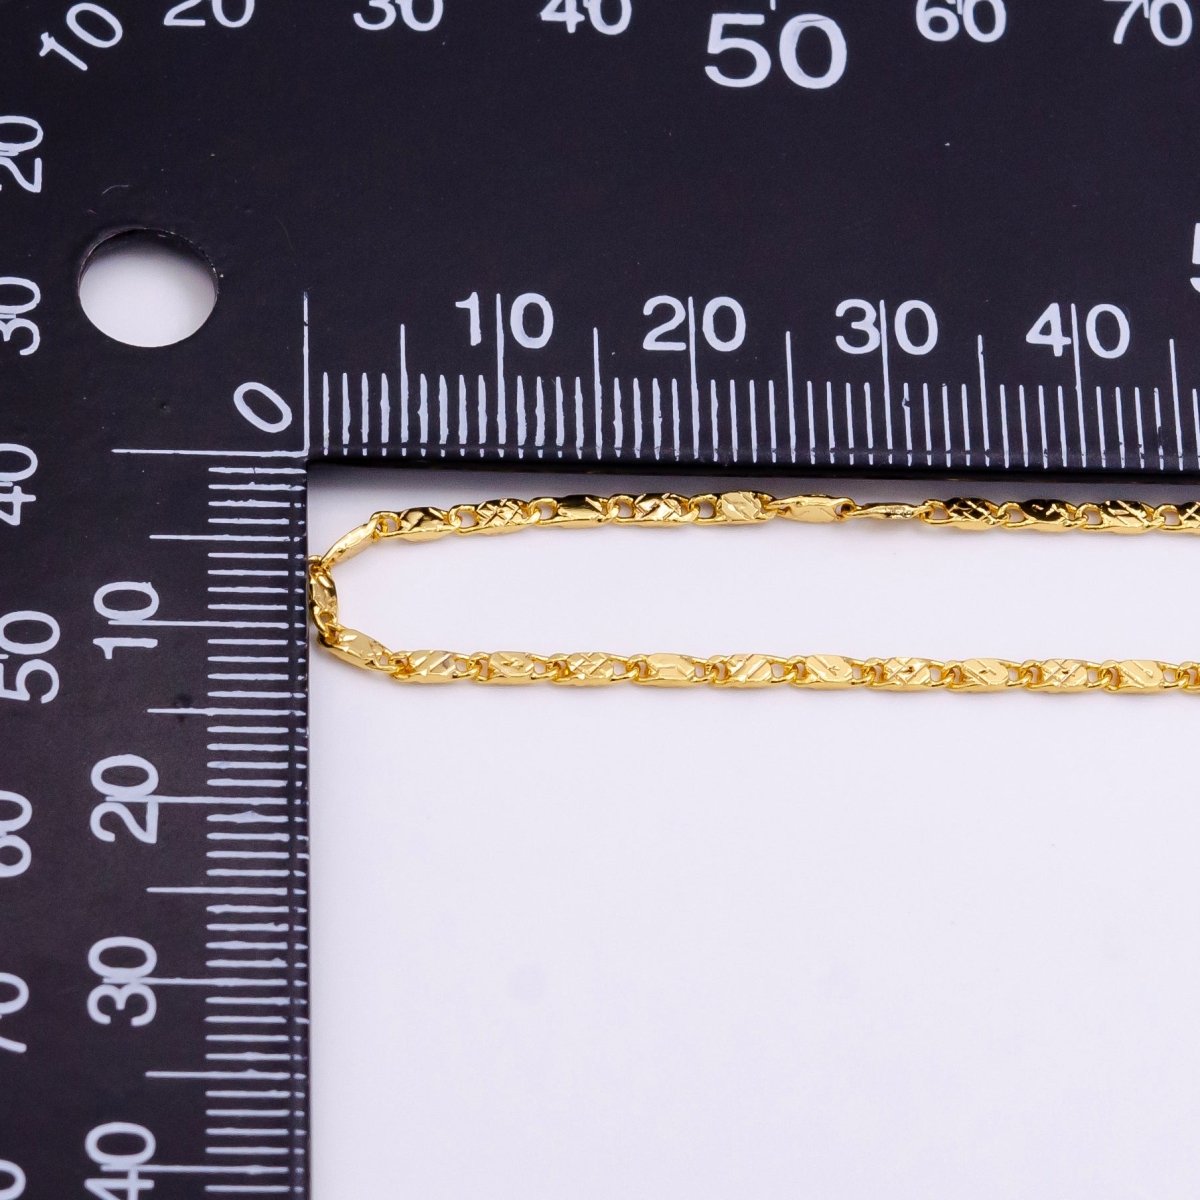 24K Gold Filled 1.6mm Sunburst Link 18 Inch Chain Necklace | WA-2445 - DLUXCA